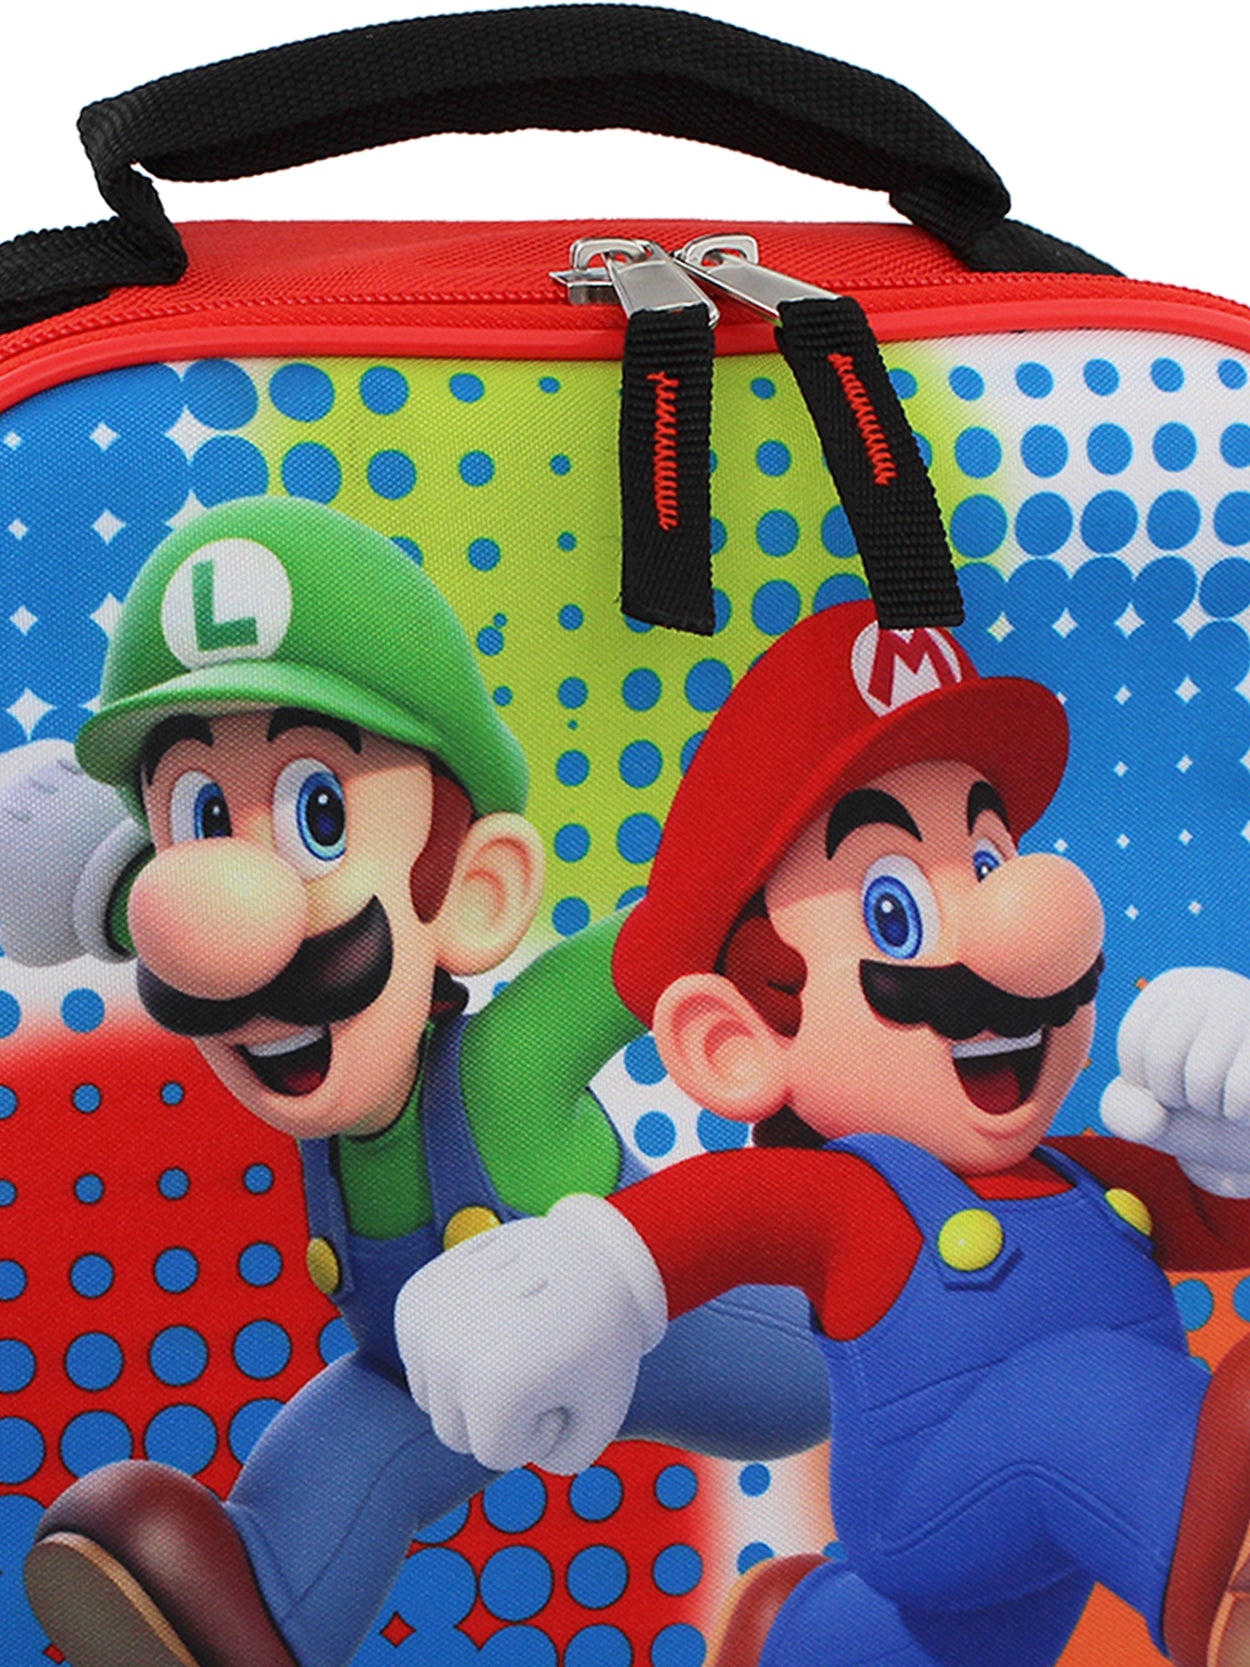 Super Mario Lunch Bag, Super Mario Lunchbag, Super Mario Products